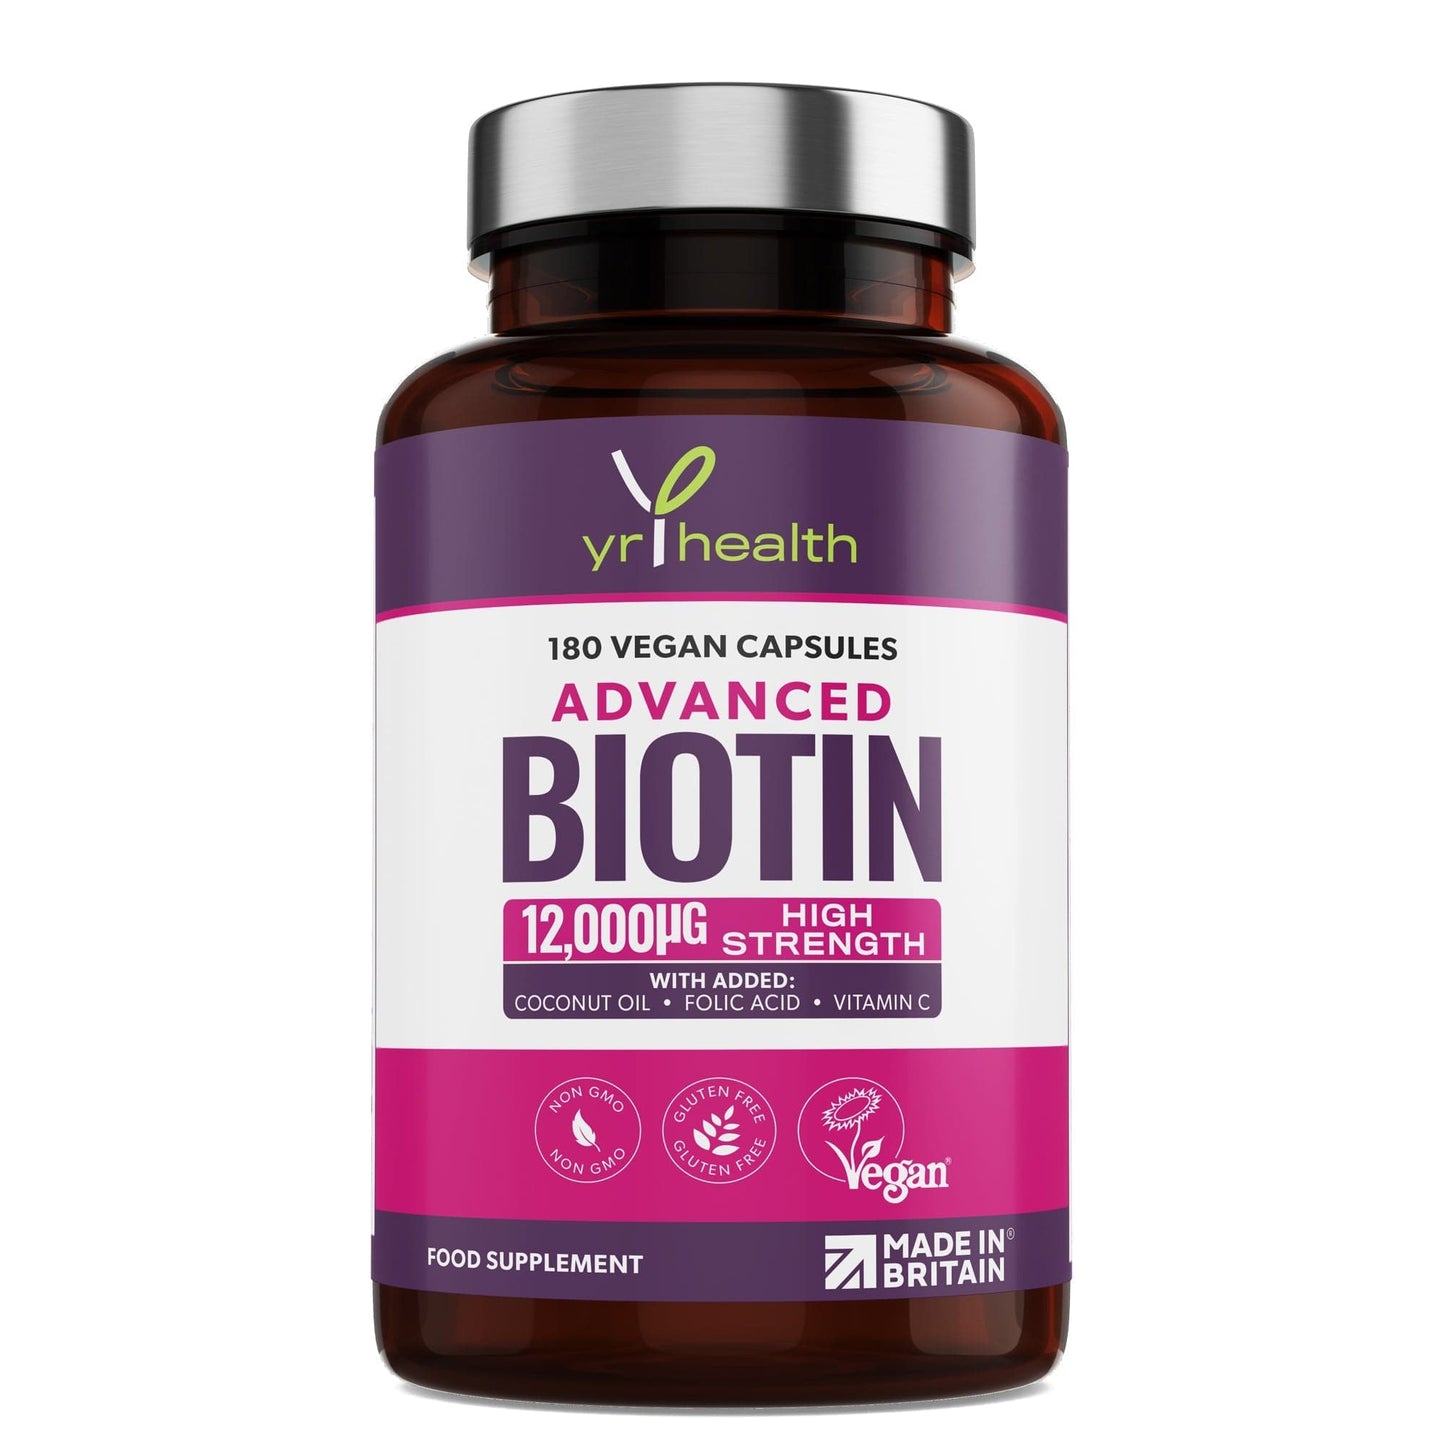 Advanced Biotin 12,000µg Complex with Added Coconut Oil, Folic Acid & Vitamin C - 180 Vegan Capsules